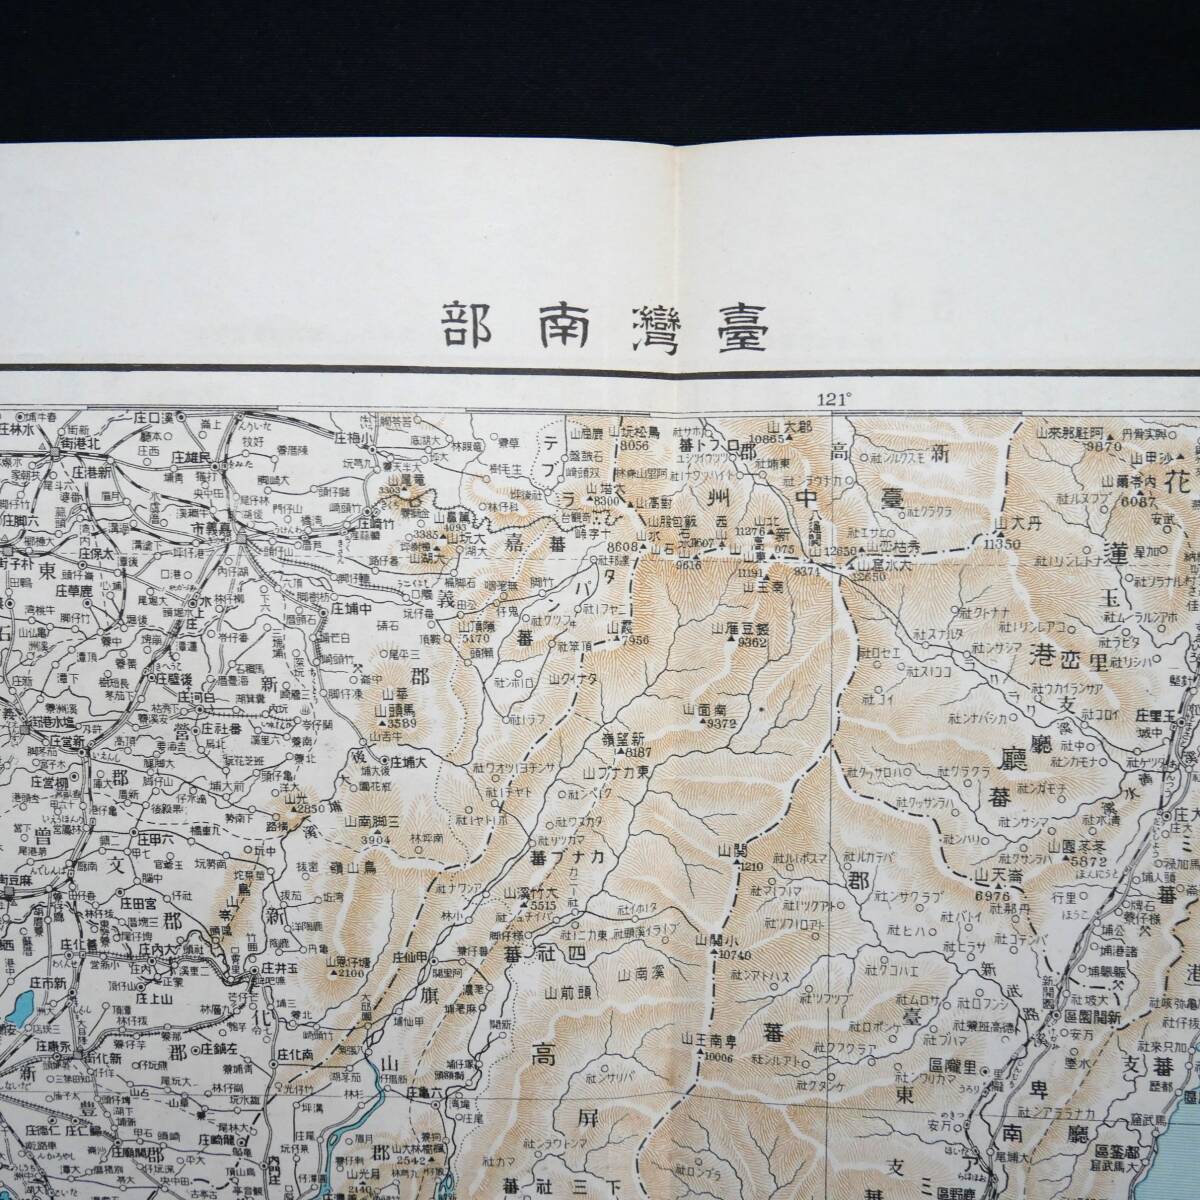  Showa era 11 year map Taiwan south part pcs south height male war front materials 